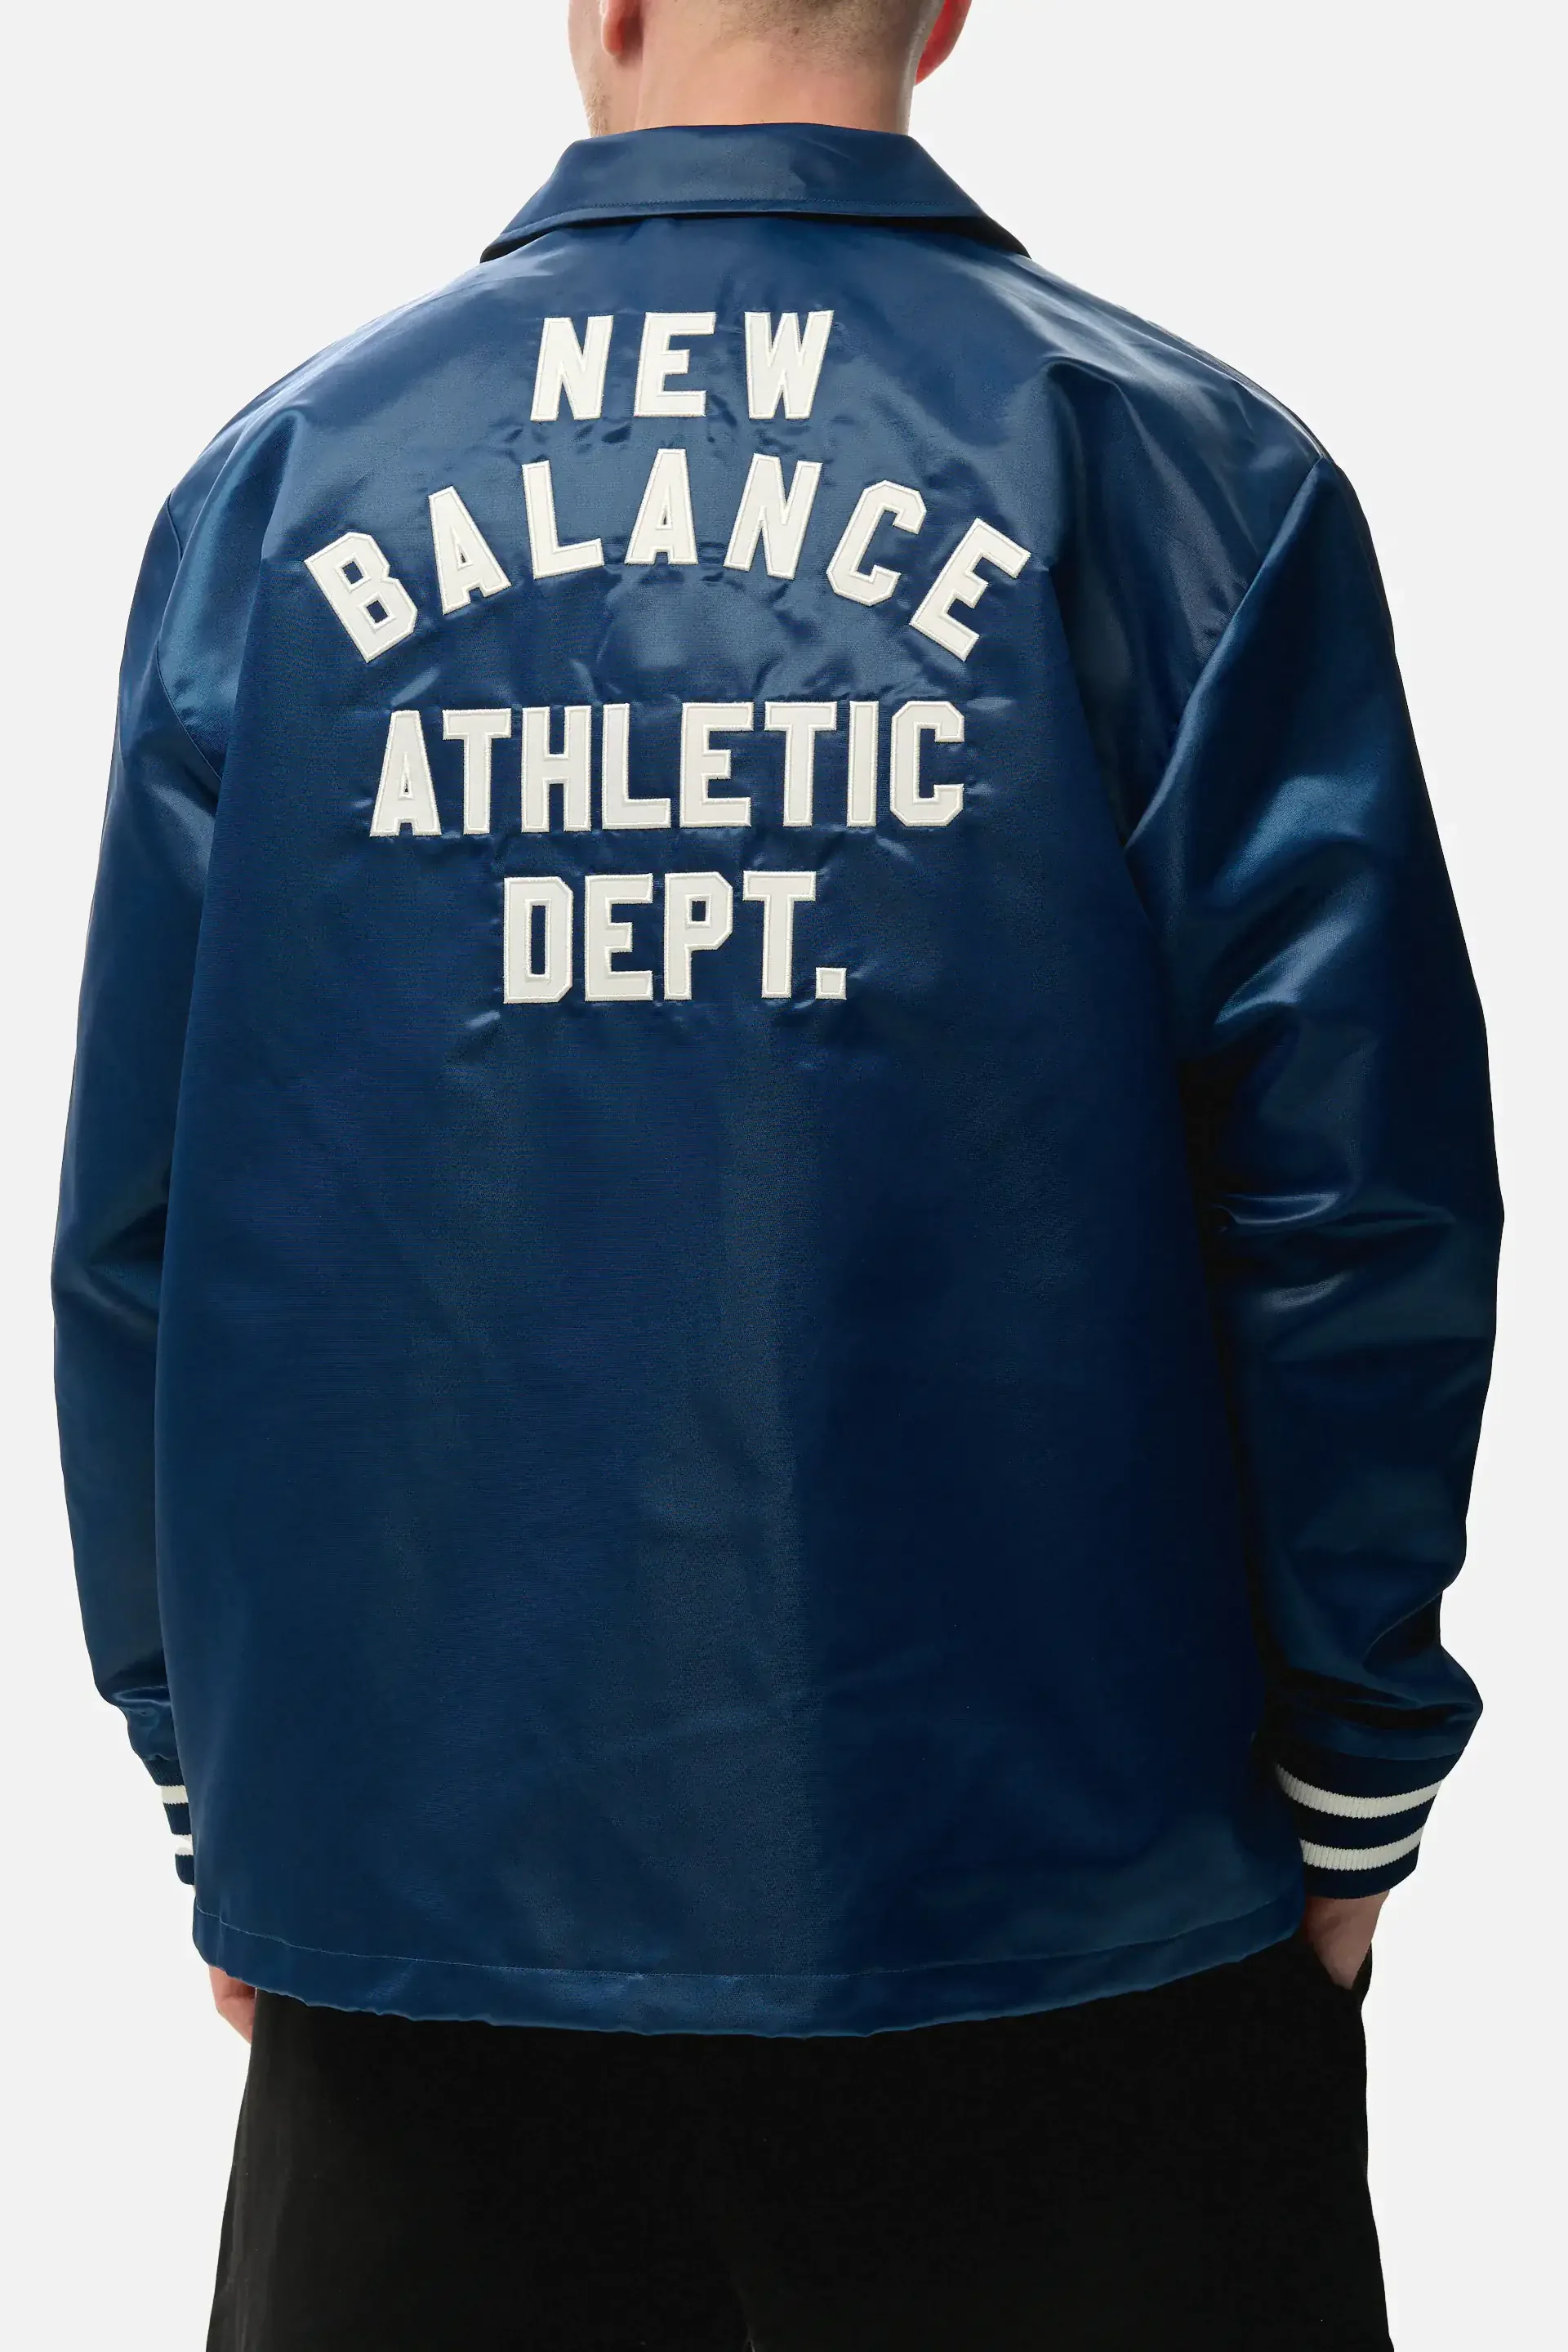 New Balance Greatest Hits Coaches Jacket Navy